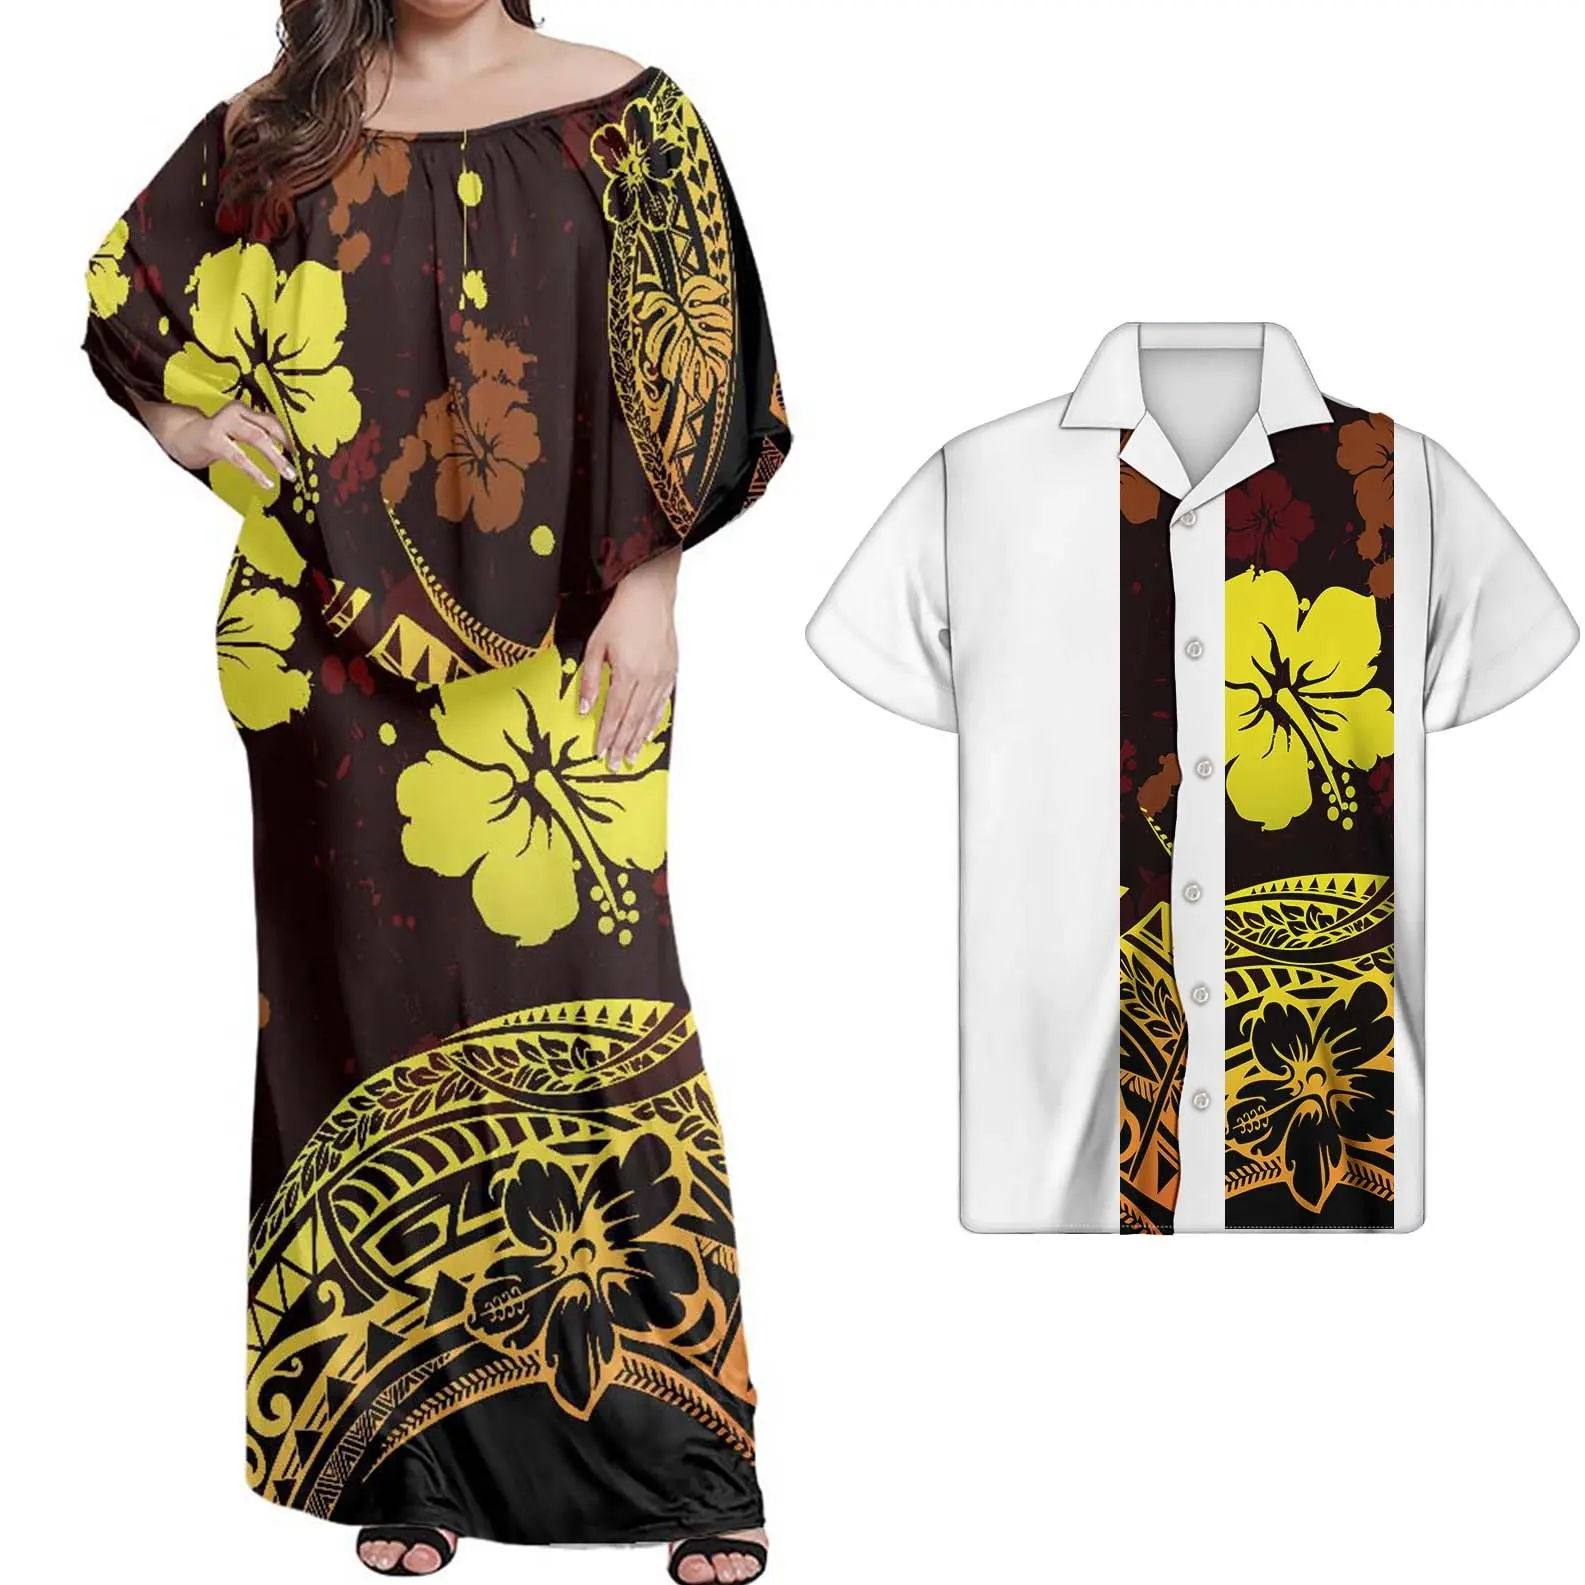 OEMホット販売カップル服レディースイブニングドレスマッチメンズシャツプリントポリネシアパターンプリントホワイトドレスエレガントな女性